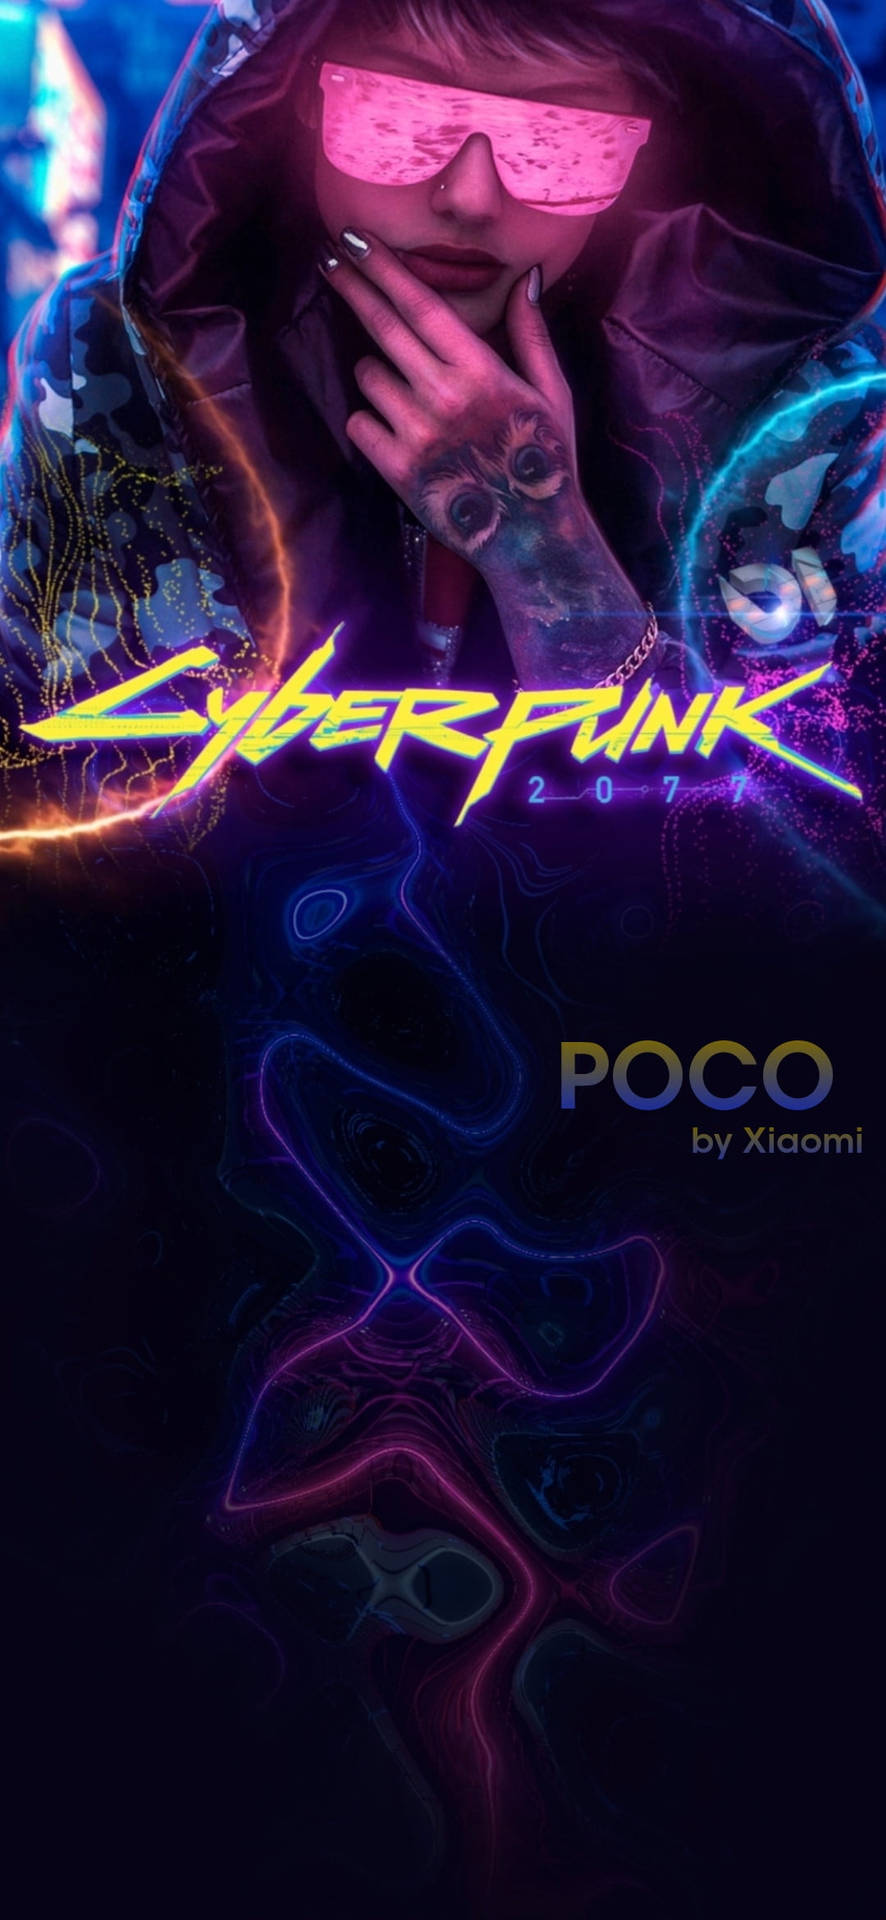 POCO X2 Cyberpunk By Xiaomi Wallpaper